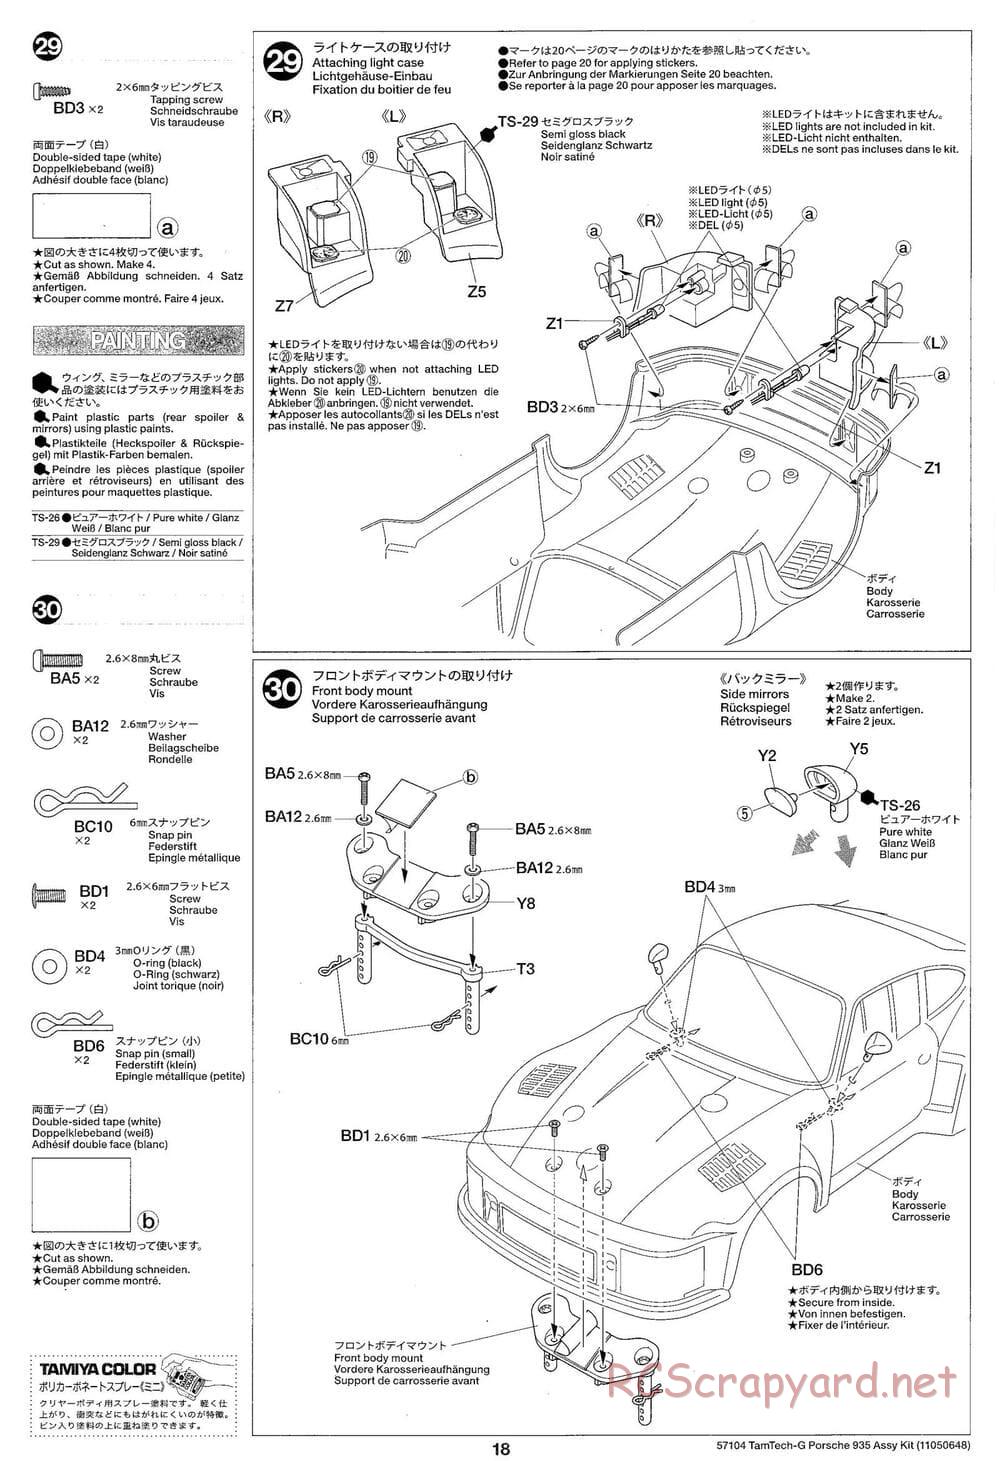 Tamiya - Porsche 935 Martini - GT-01 Chassis - Manual - Page 18